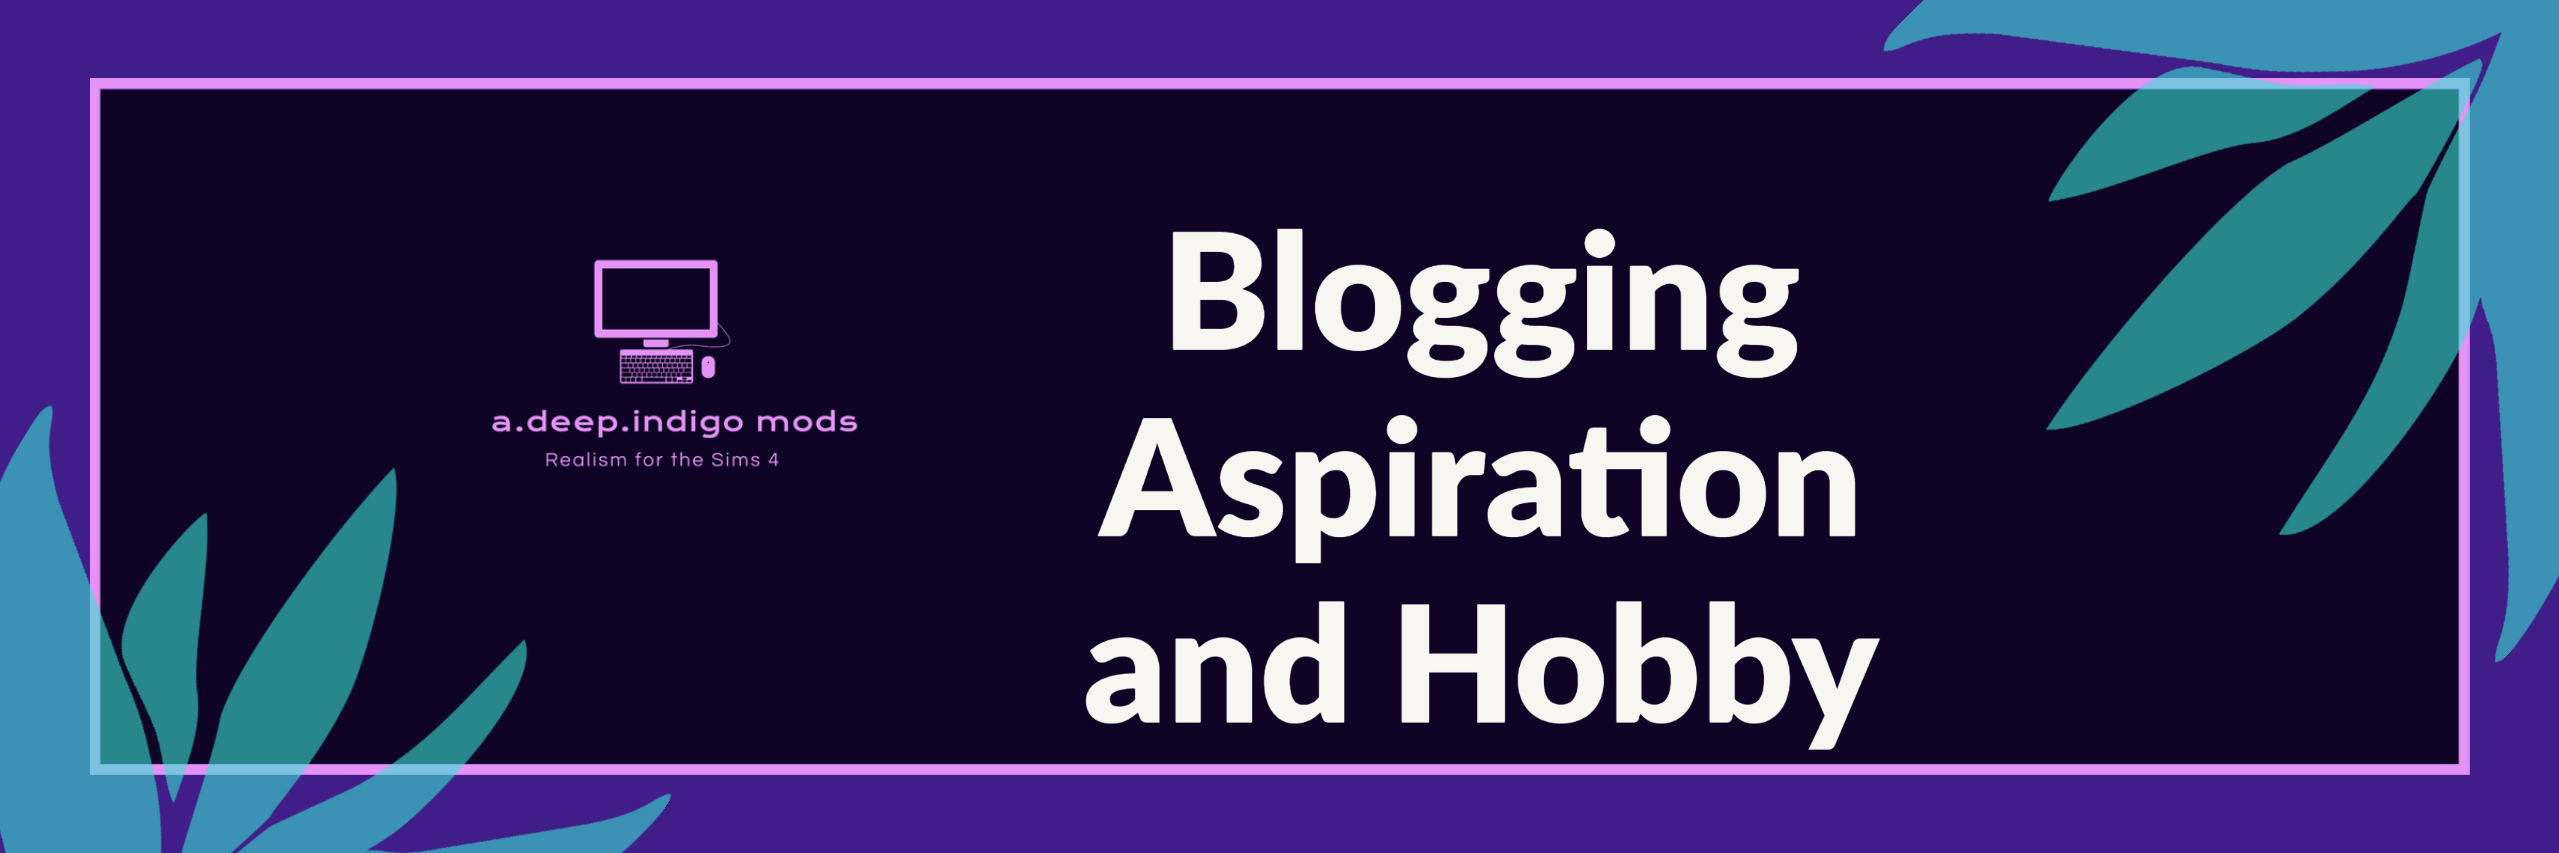 Blogging Hobby and Blog Artist Aspiration